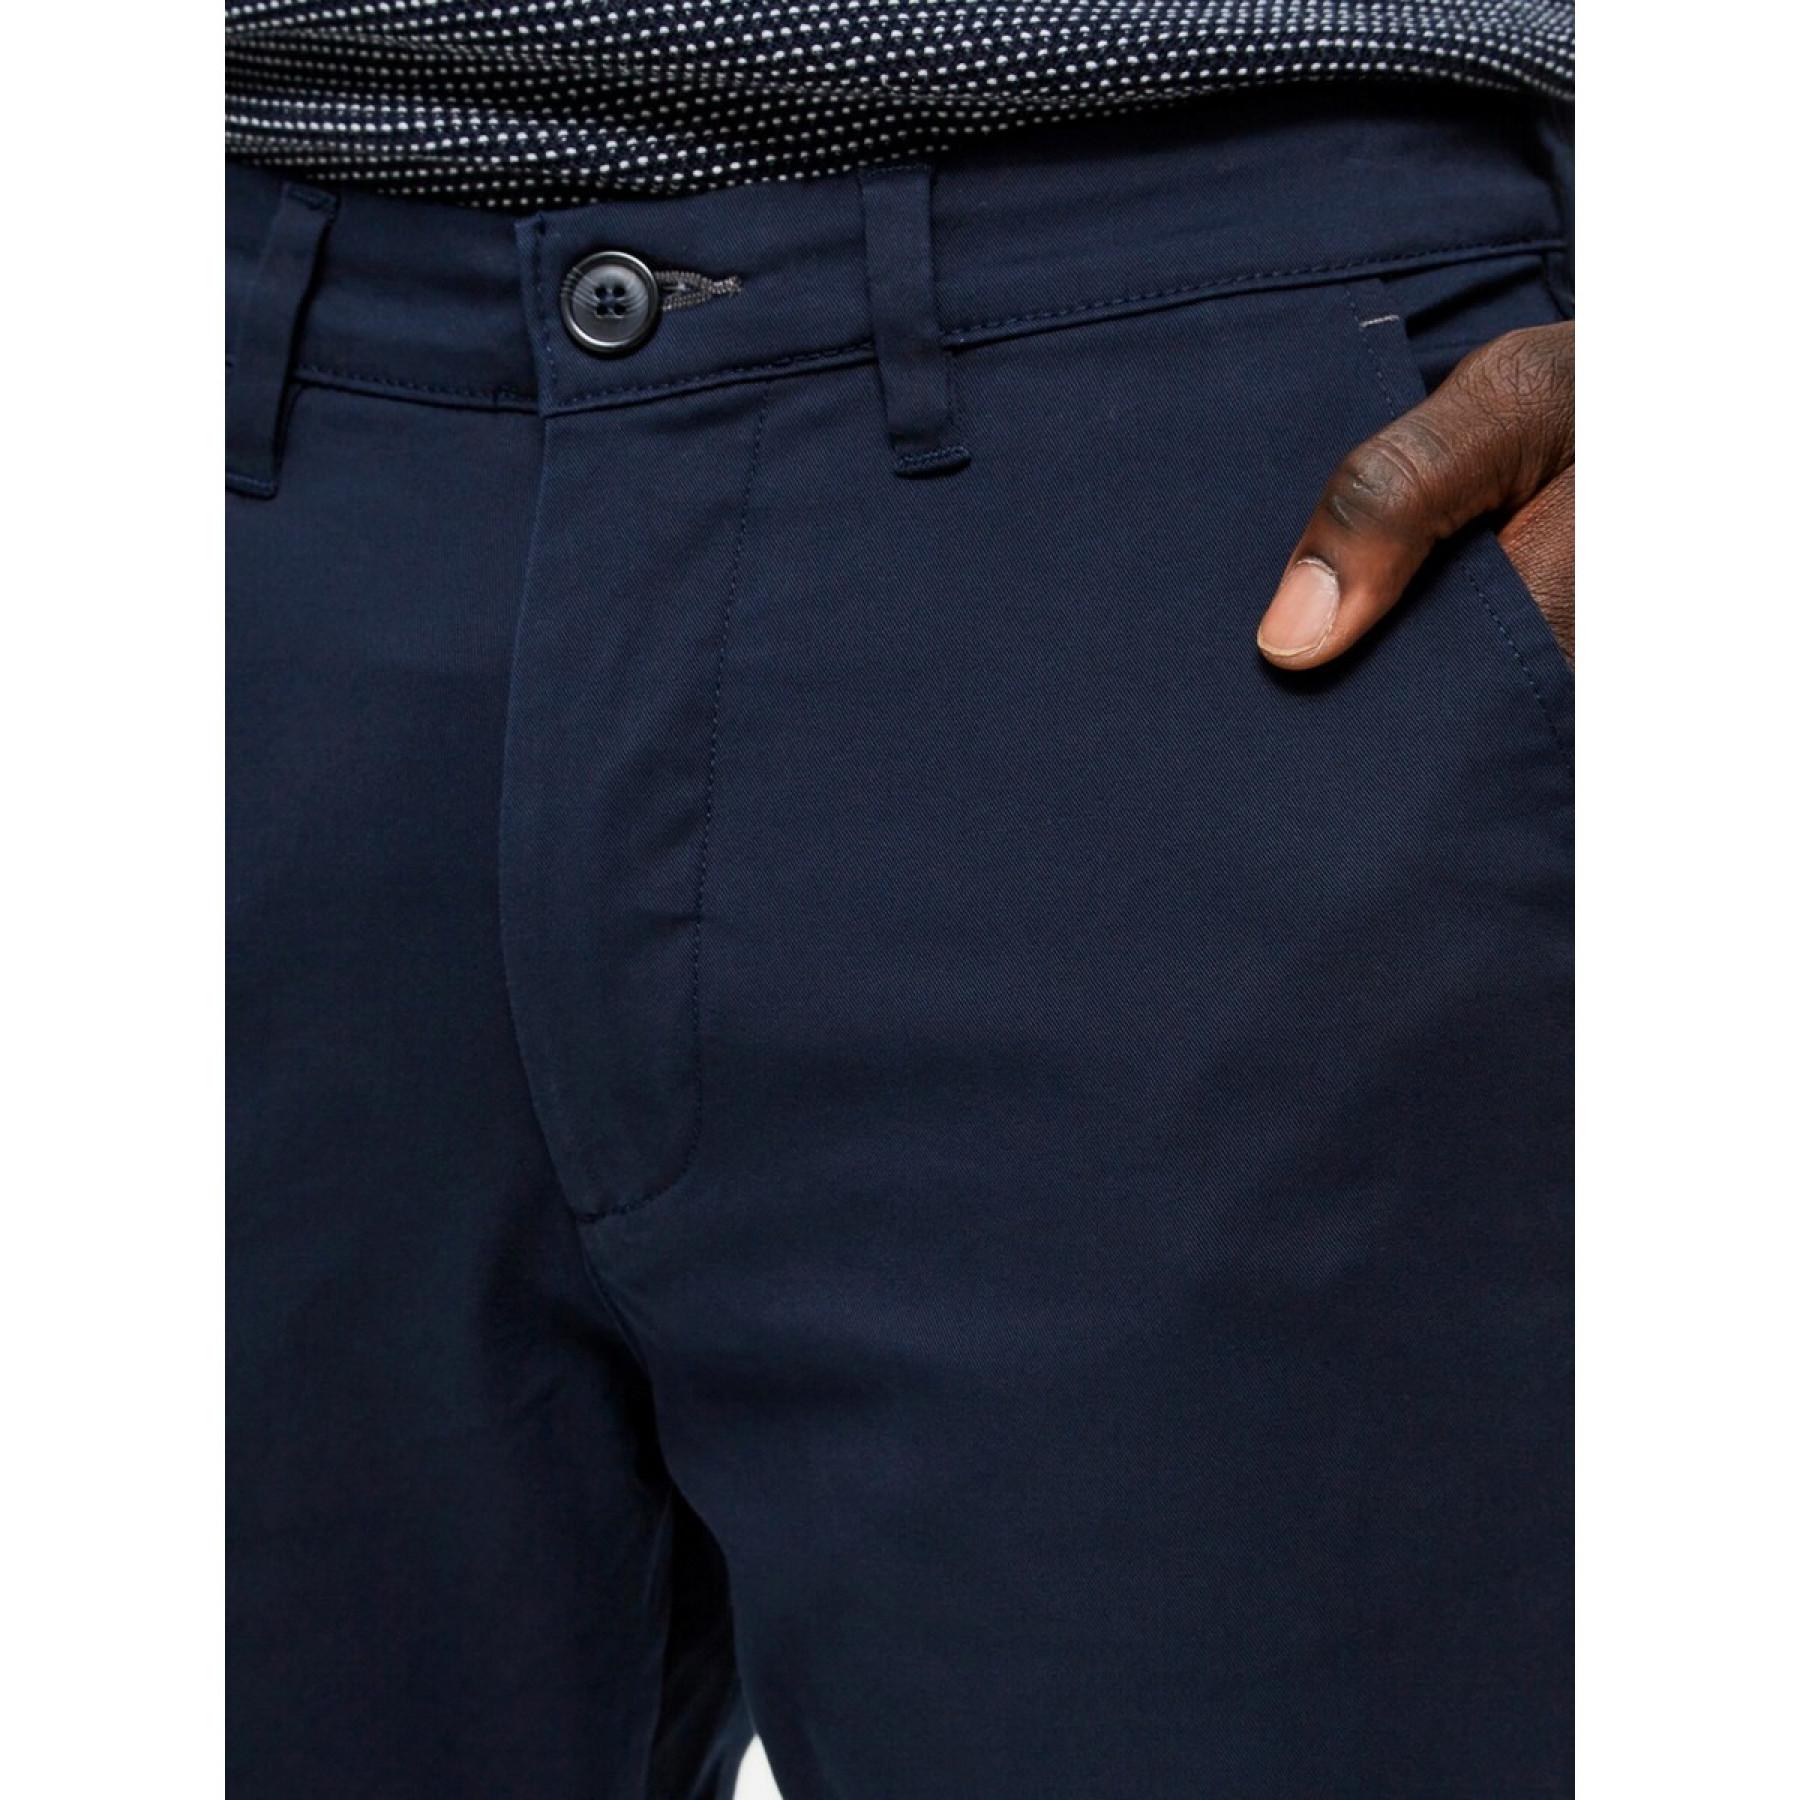 Pants Selected chino Miles flex slim